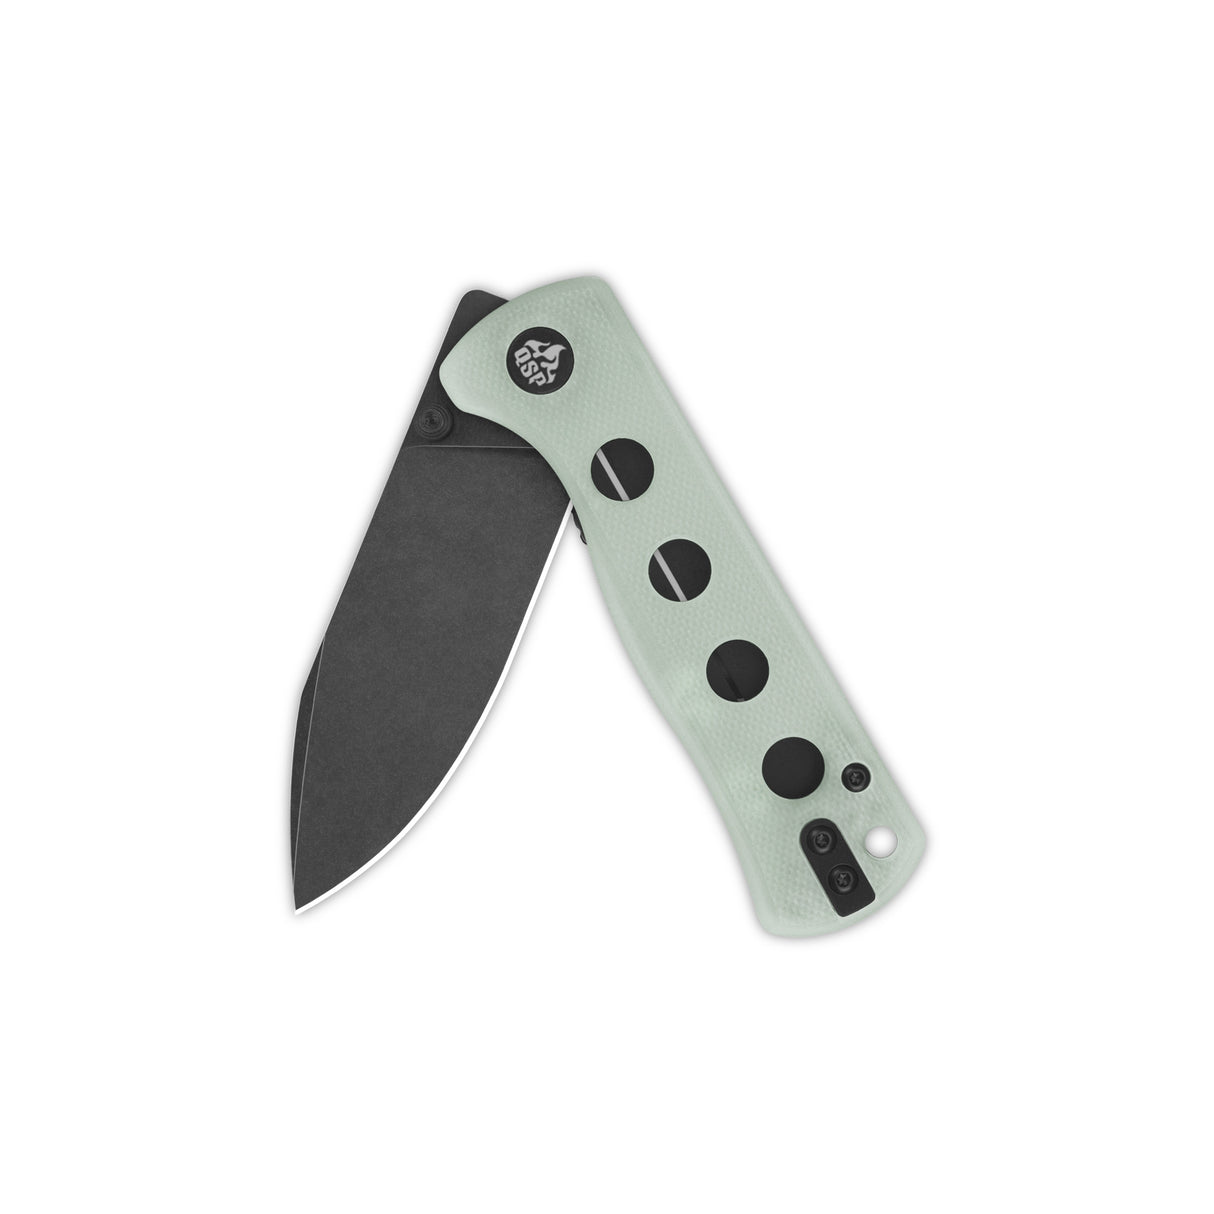 QSP Canary Folder Liner Lock Pocket Knife 14C28N Blade Purple G10 Hand –  QSP KNIFE